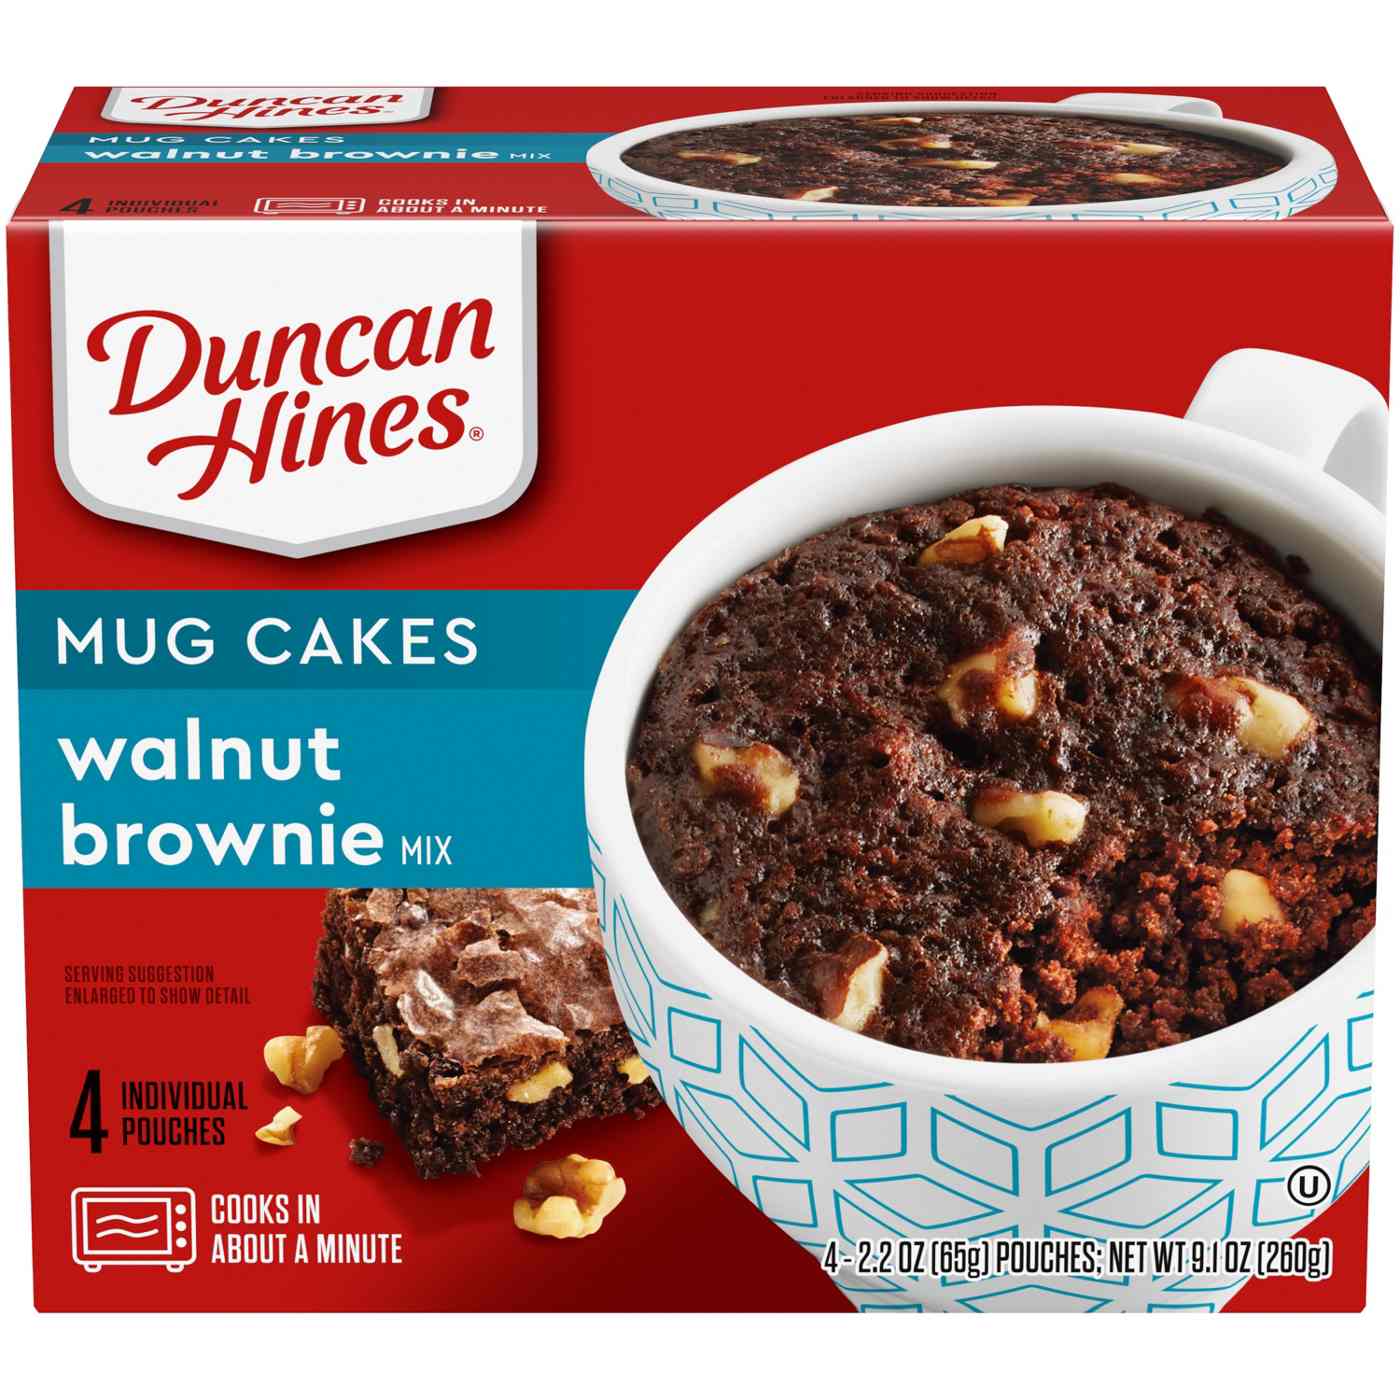 Duncan Hines Mug Cakes Walnut Brownie Mix; image 1 of 7